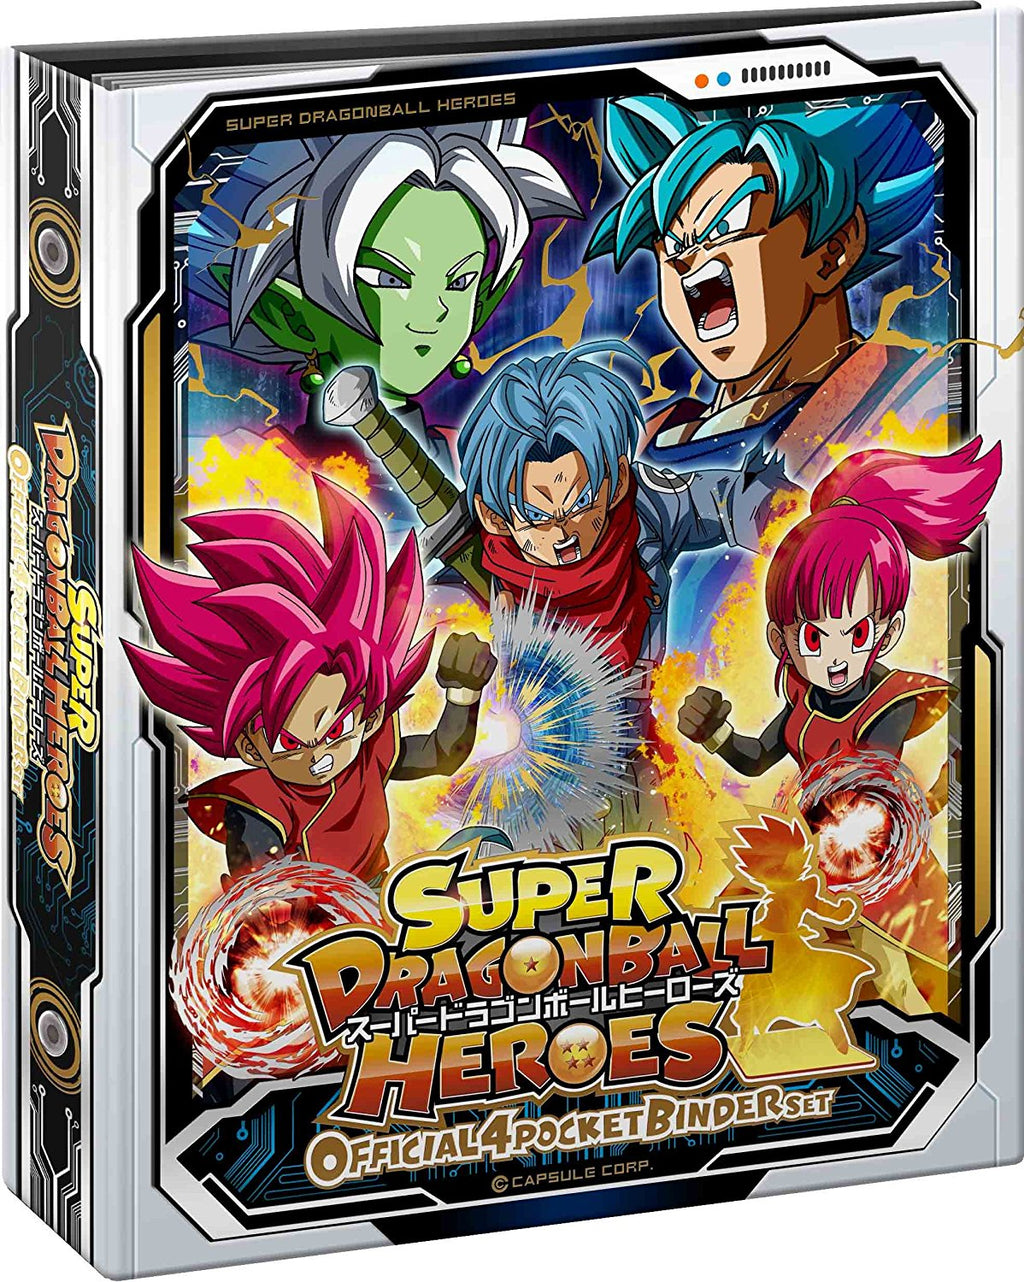 DB Super Dragon Ball Heroes 4 pocket binder set the Big Bang mission